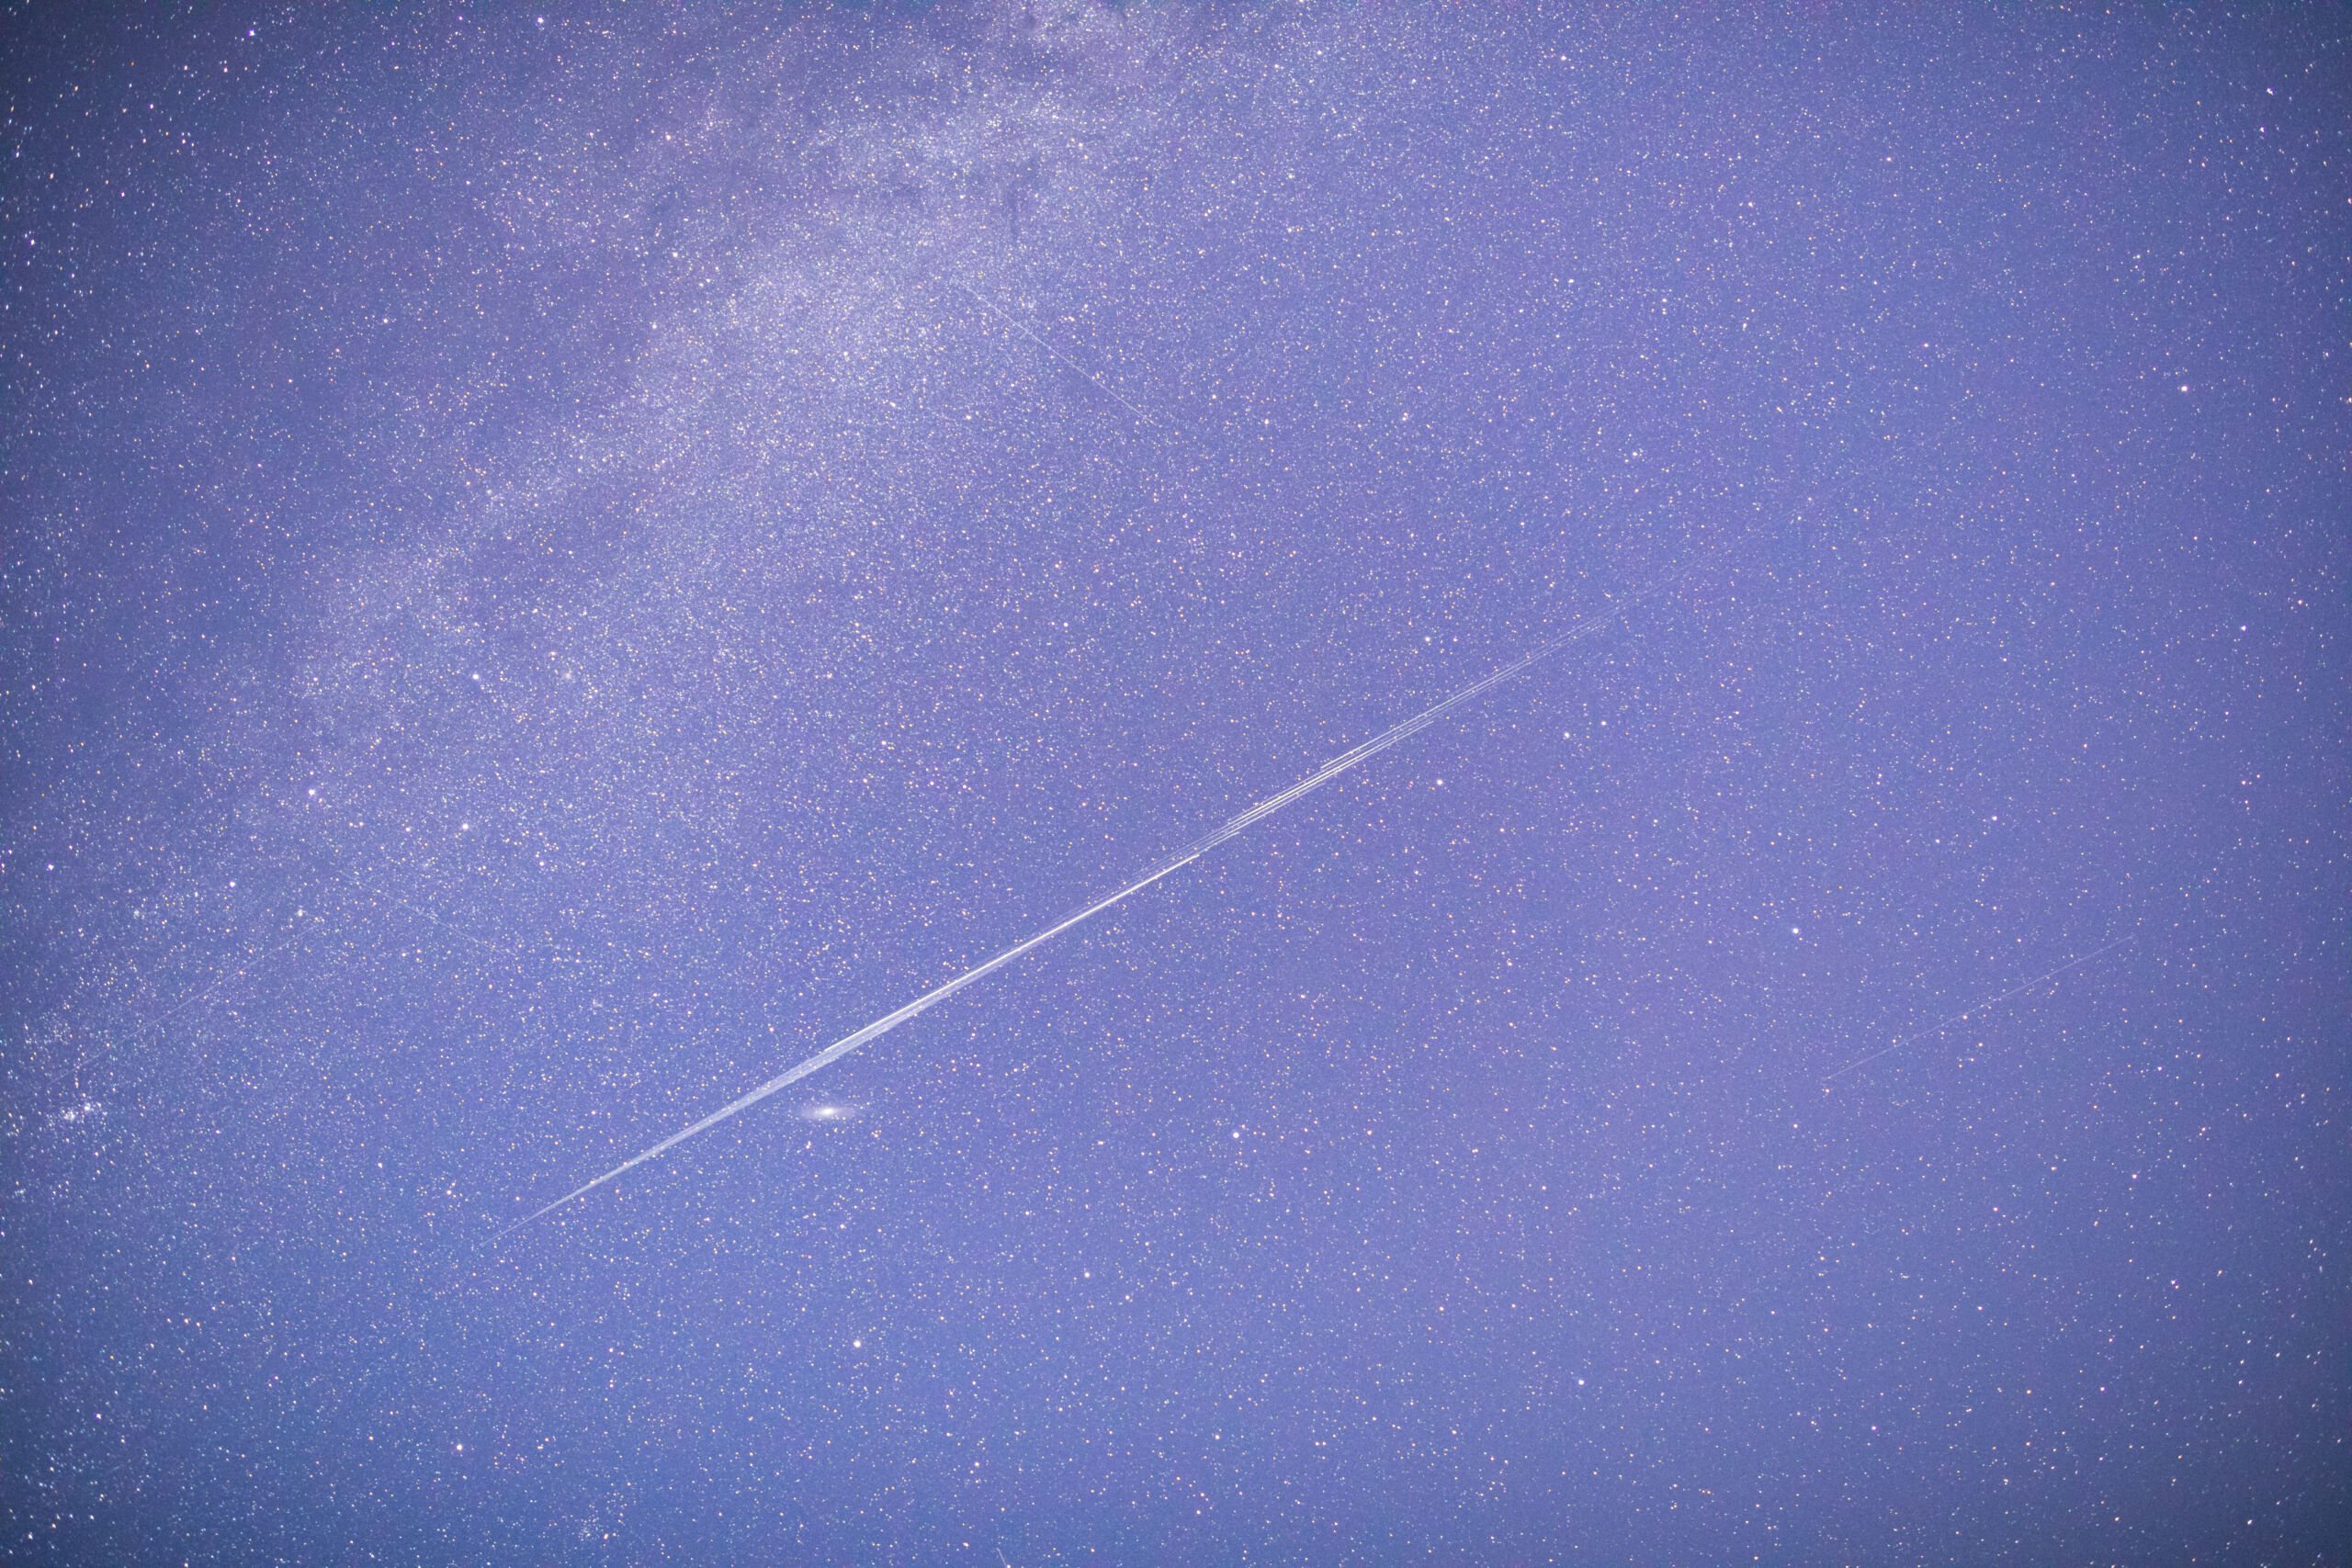 Starlink satellites streak through a photo of the night sky 